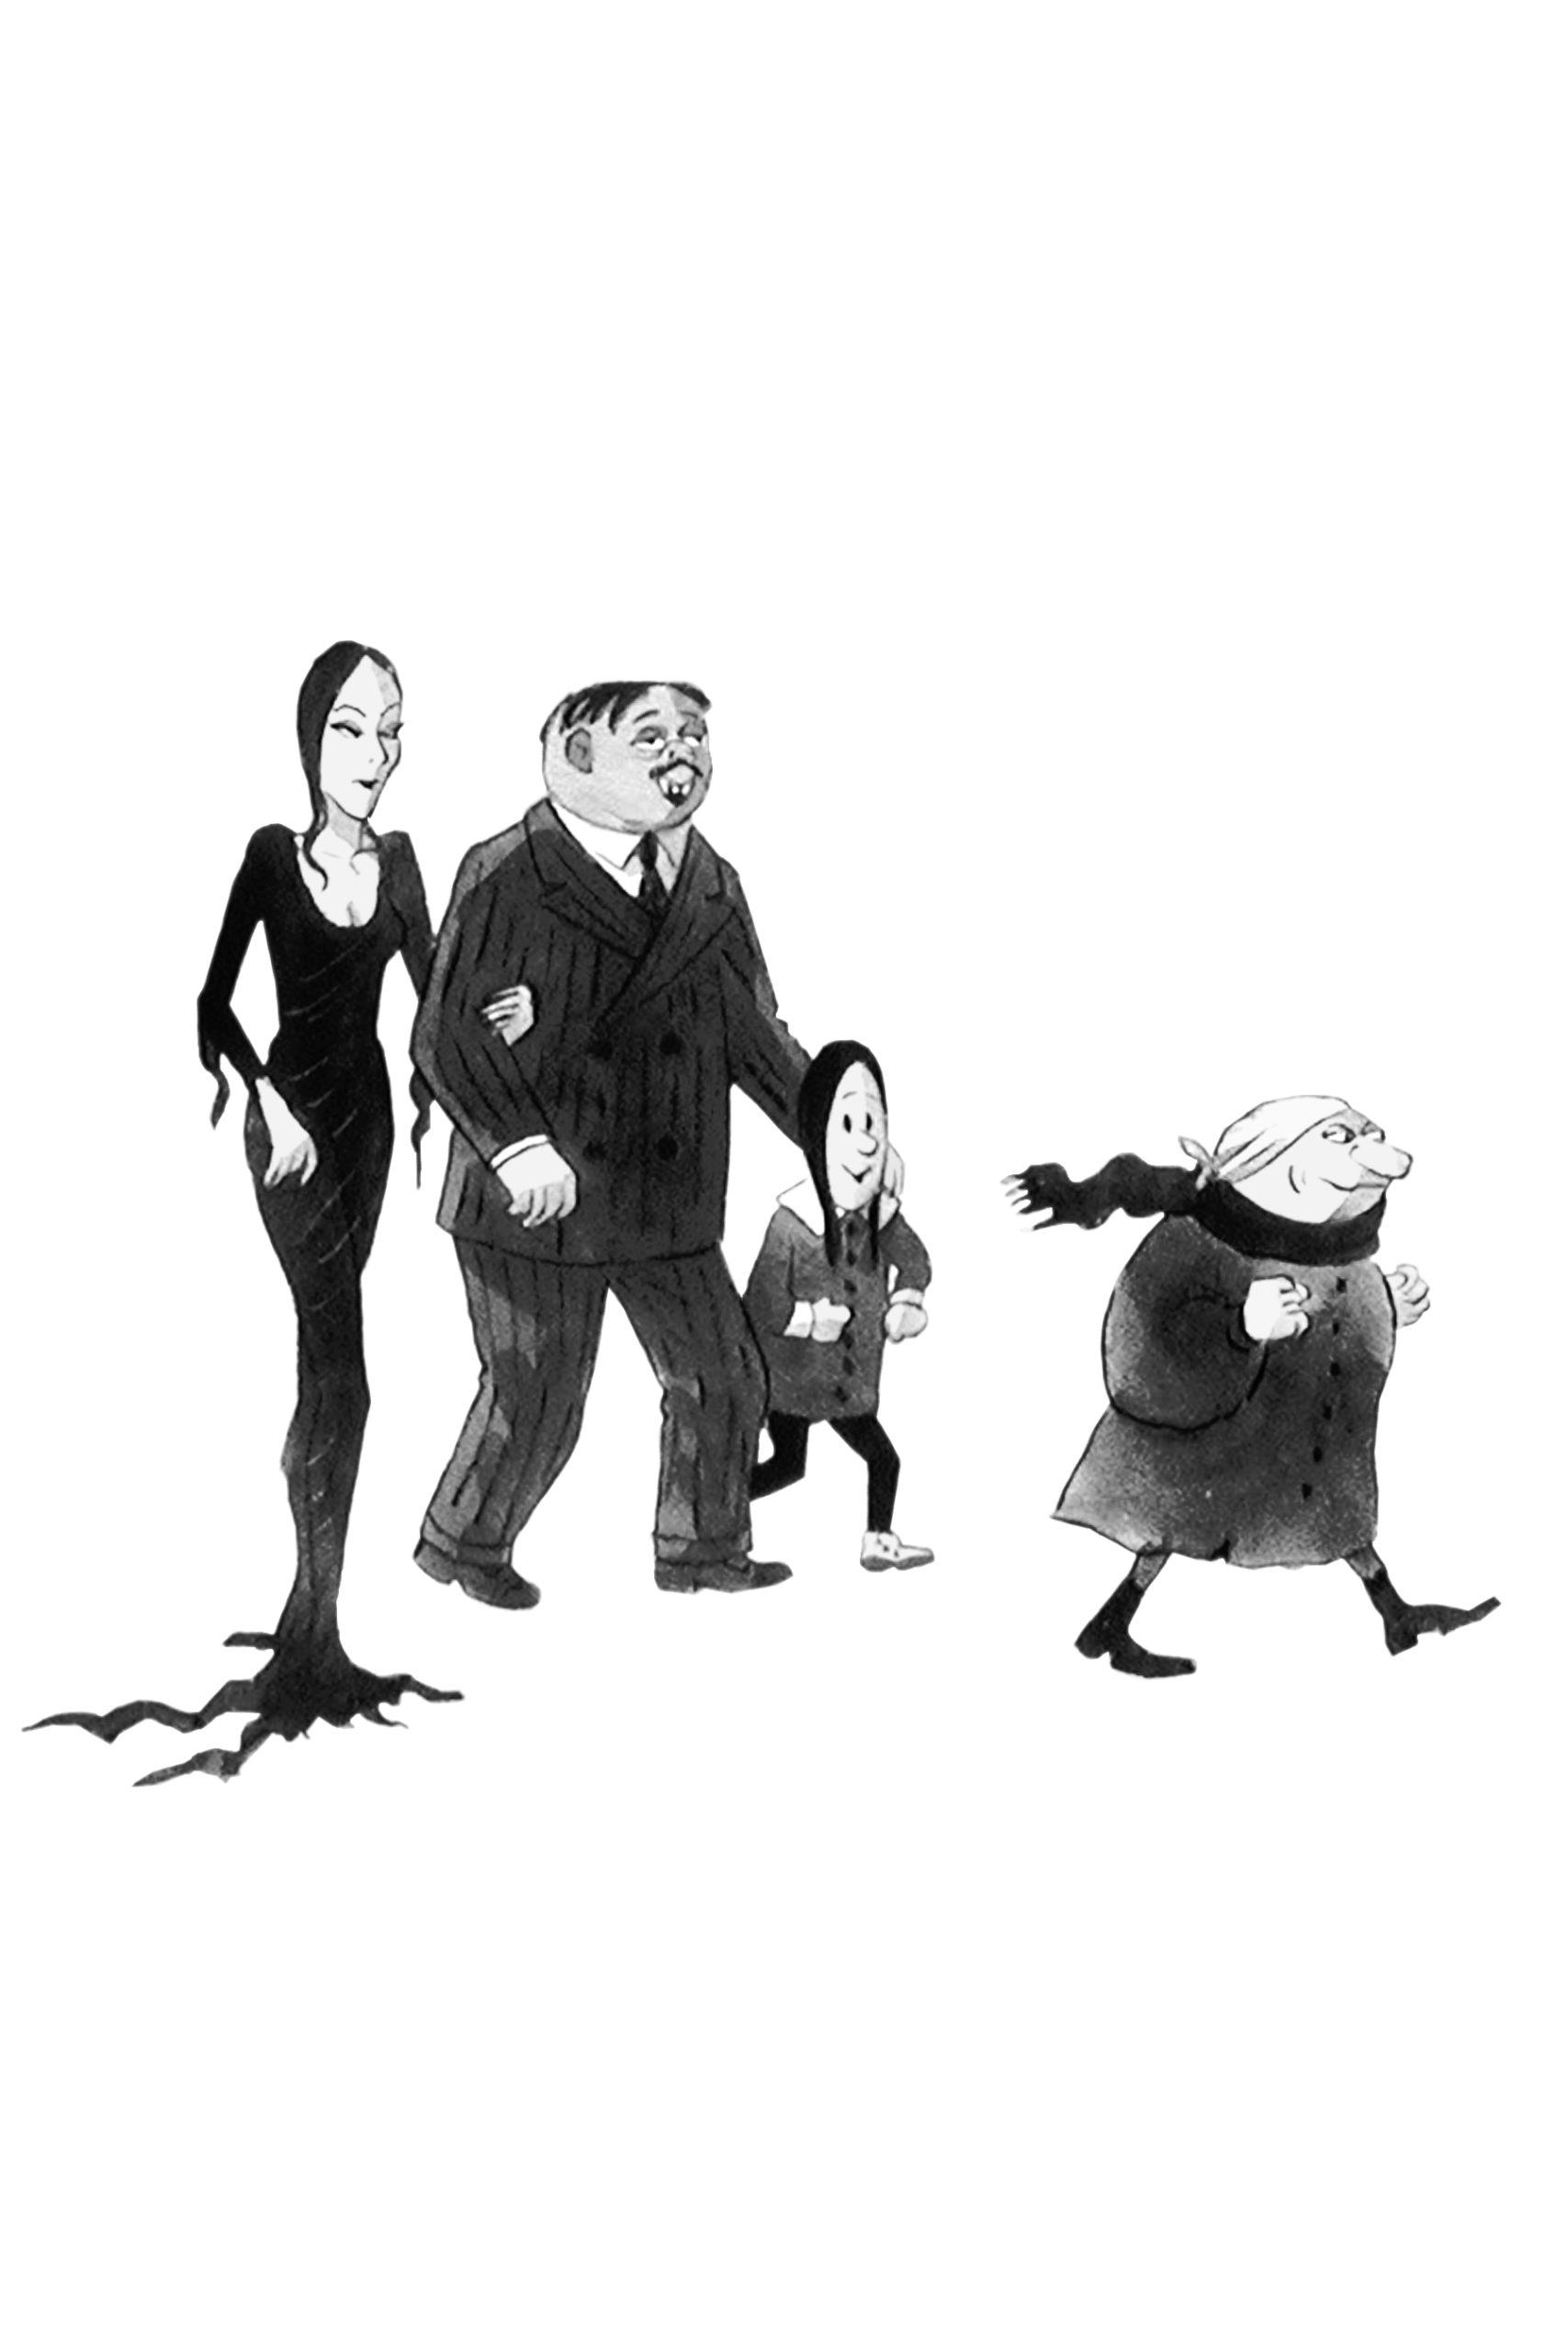 Cartoon characters created by Charles Addams.